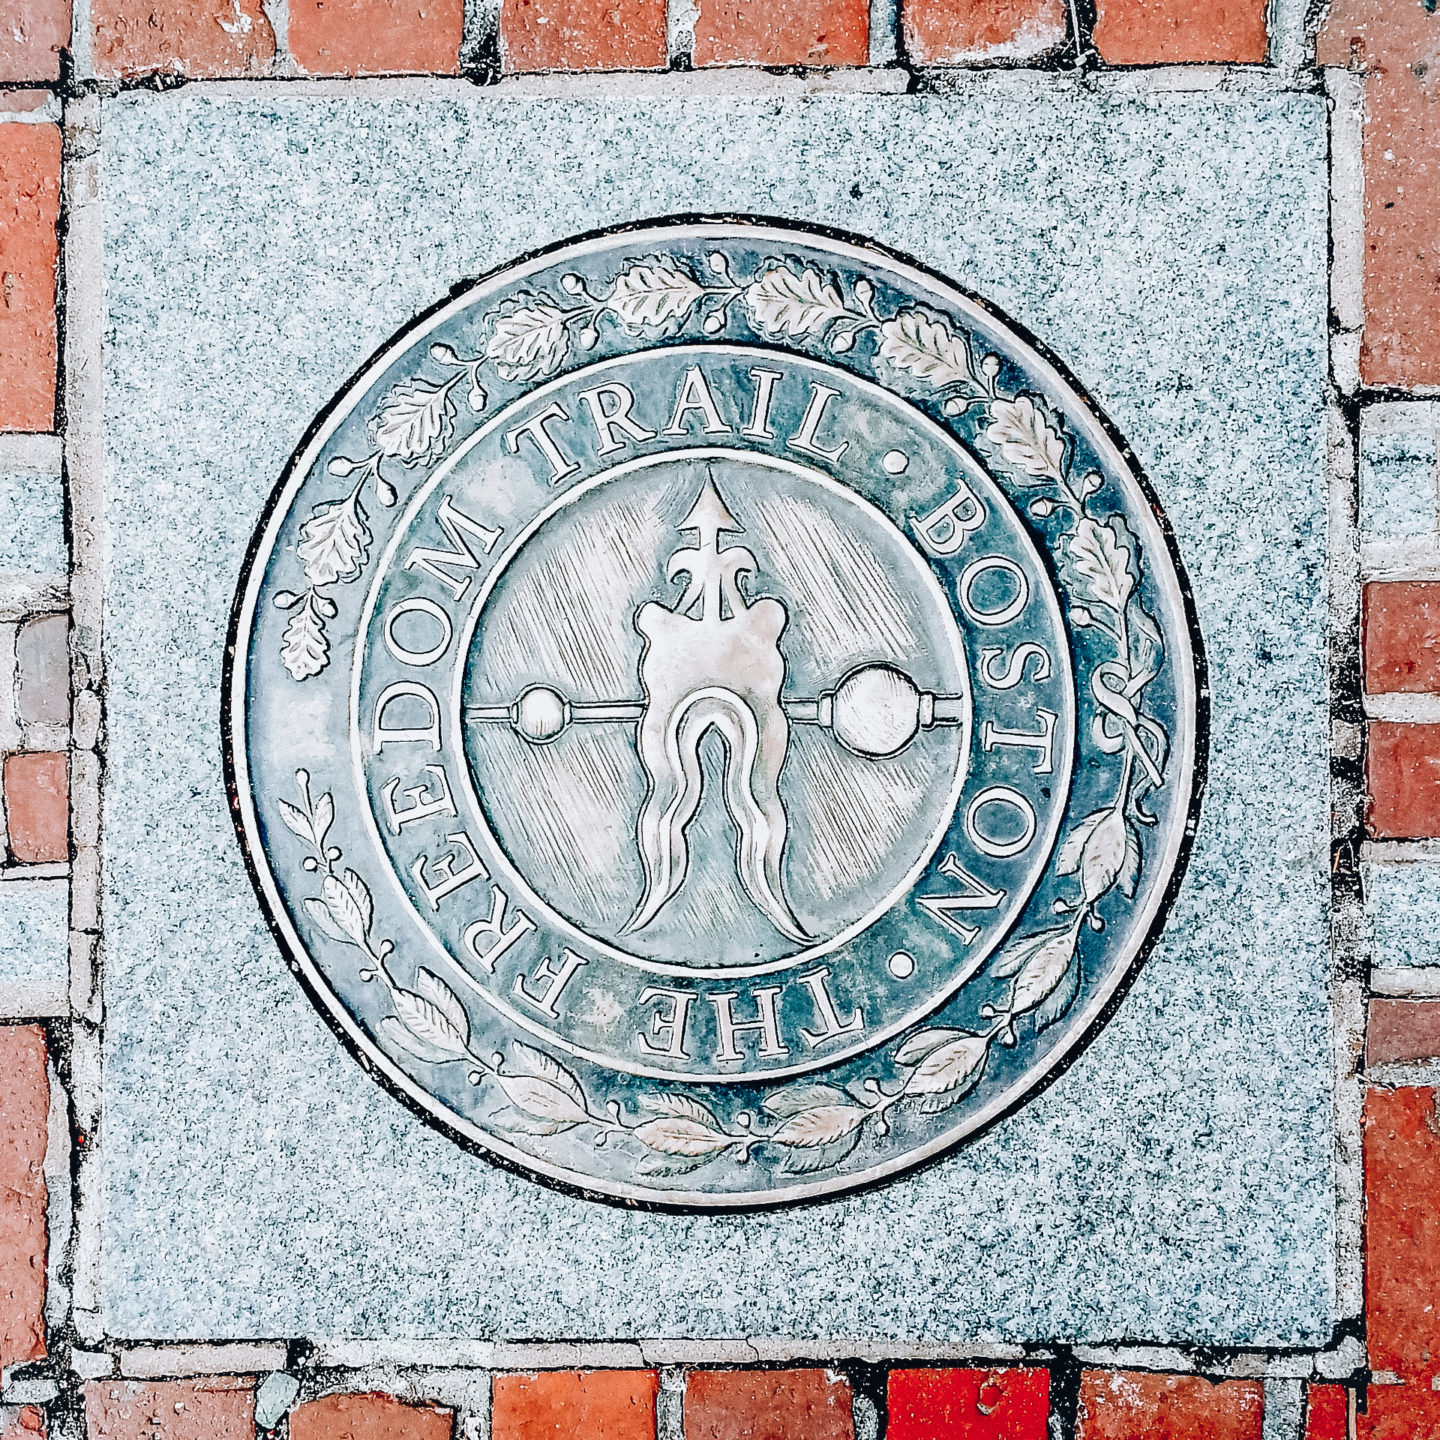 Freedom trail sidewalk emblem in Boston Massachusetts